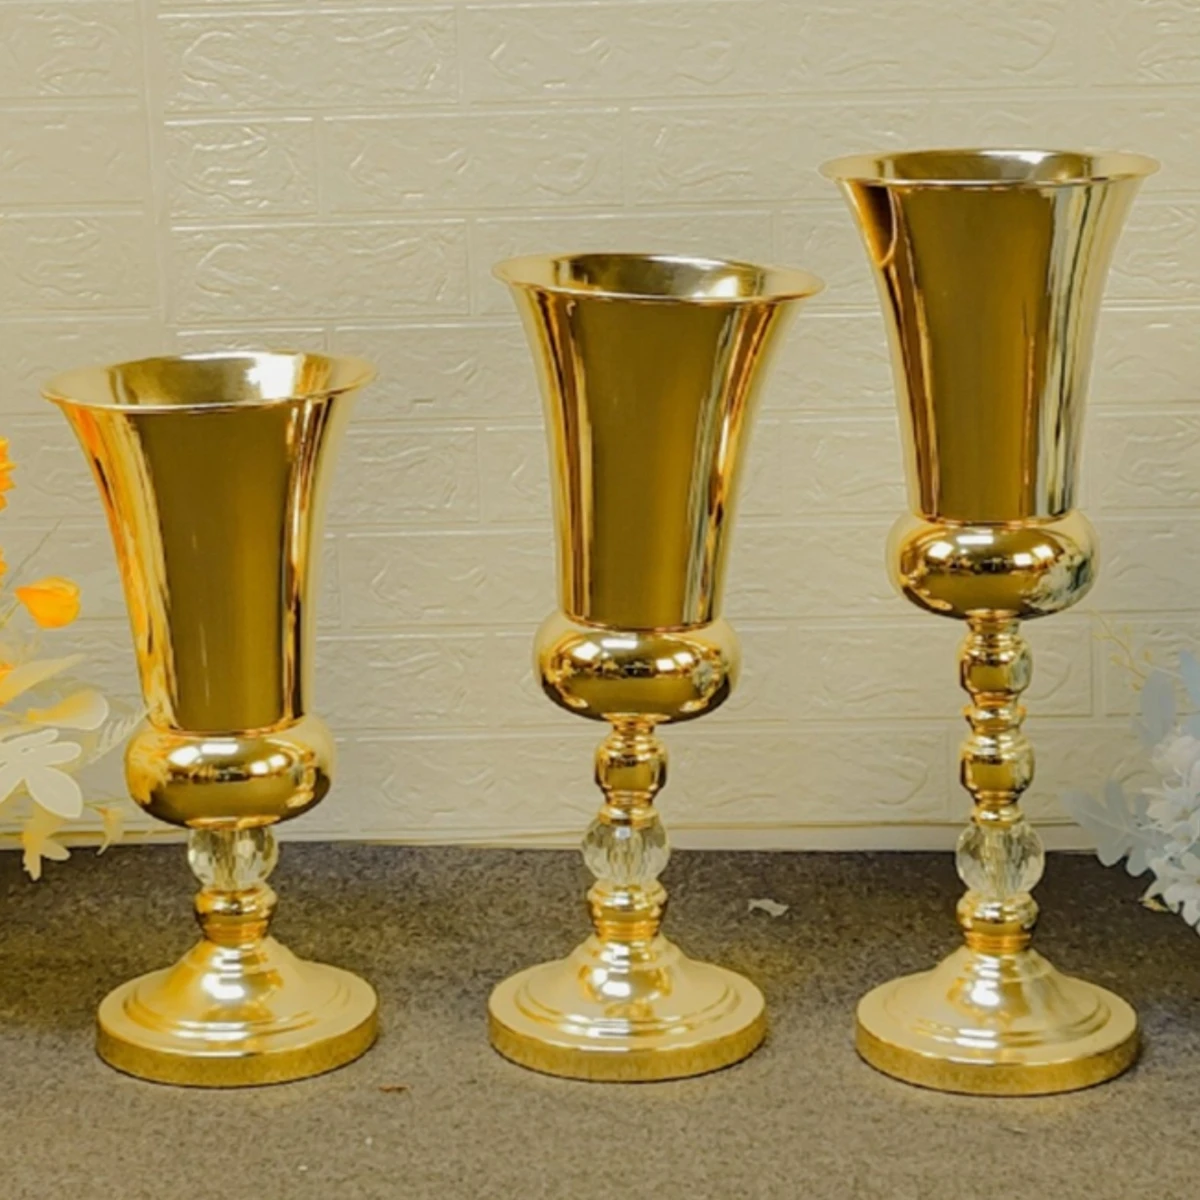 

12pcs )H 40cm/50cm/60cm/80cm/100cm) Wedding Supplies Gold Metal Crystal Flower Stand Wedding Table Decoration Centerpiece 690